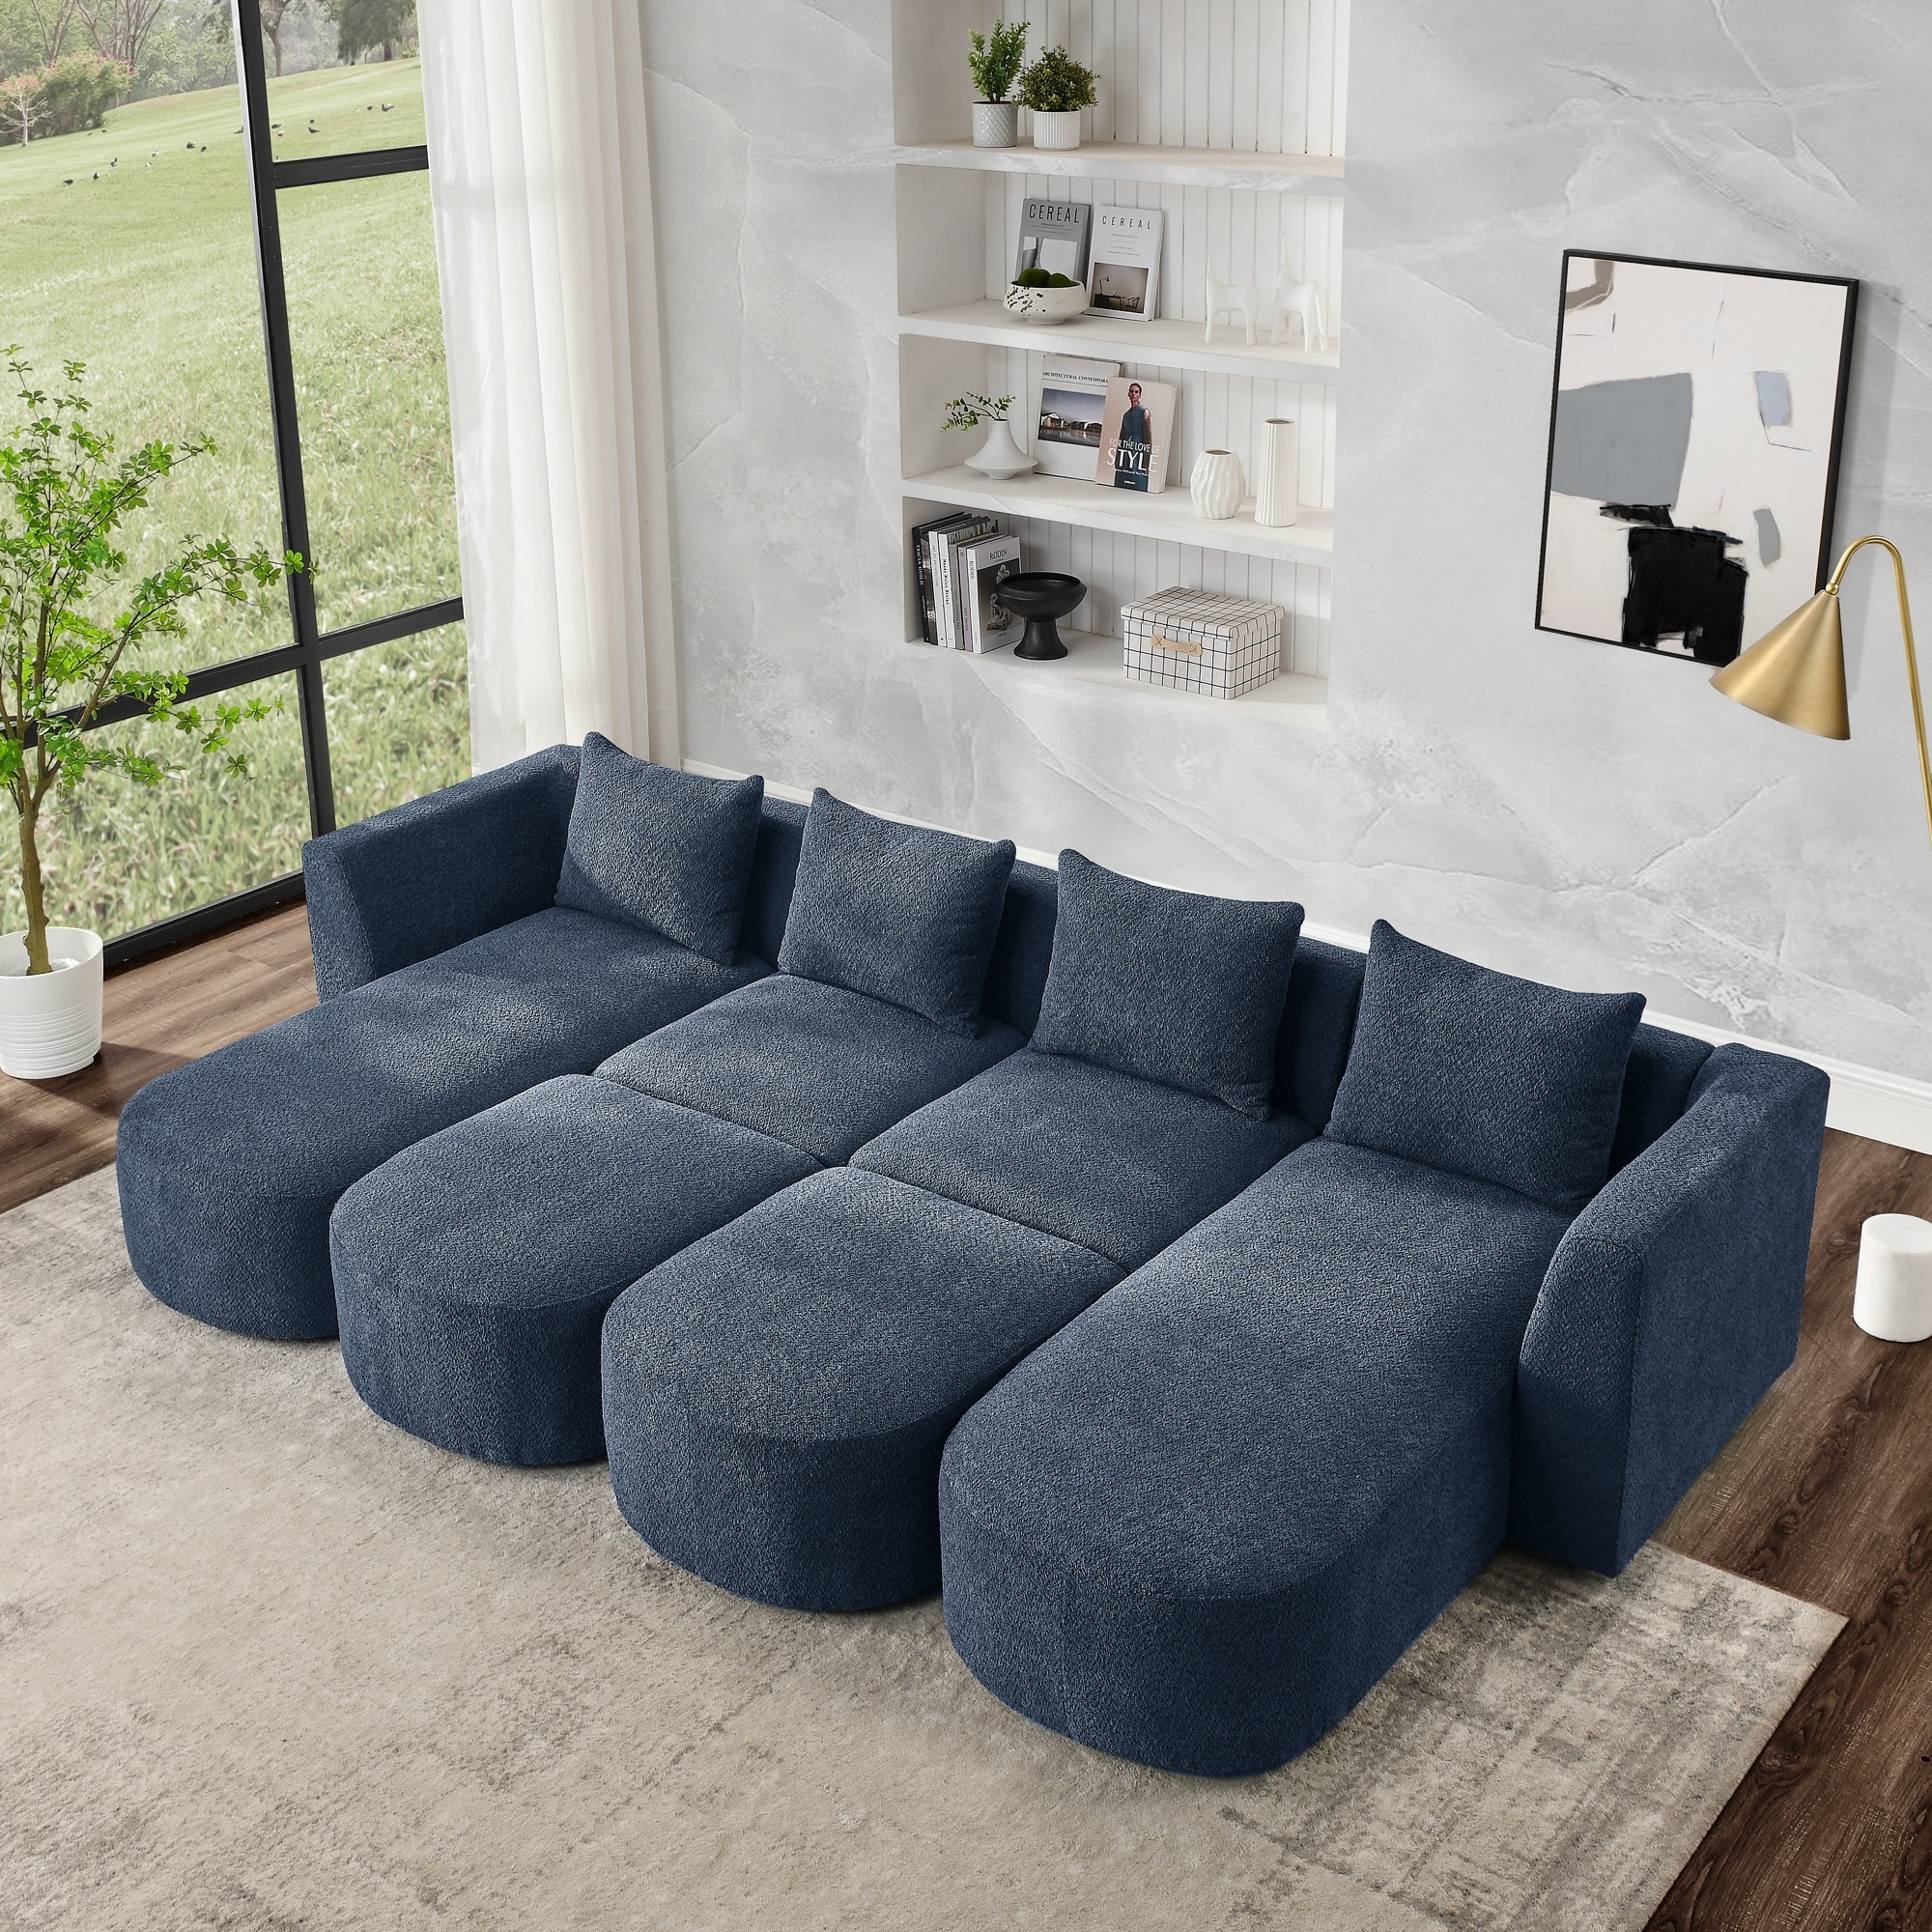 U-shape Modular Sectional Sofa With 2 Chaise And 2 Ottoman  4 Pillows  Diy Combination  Loop Yarn Fabric